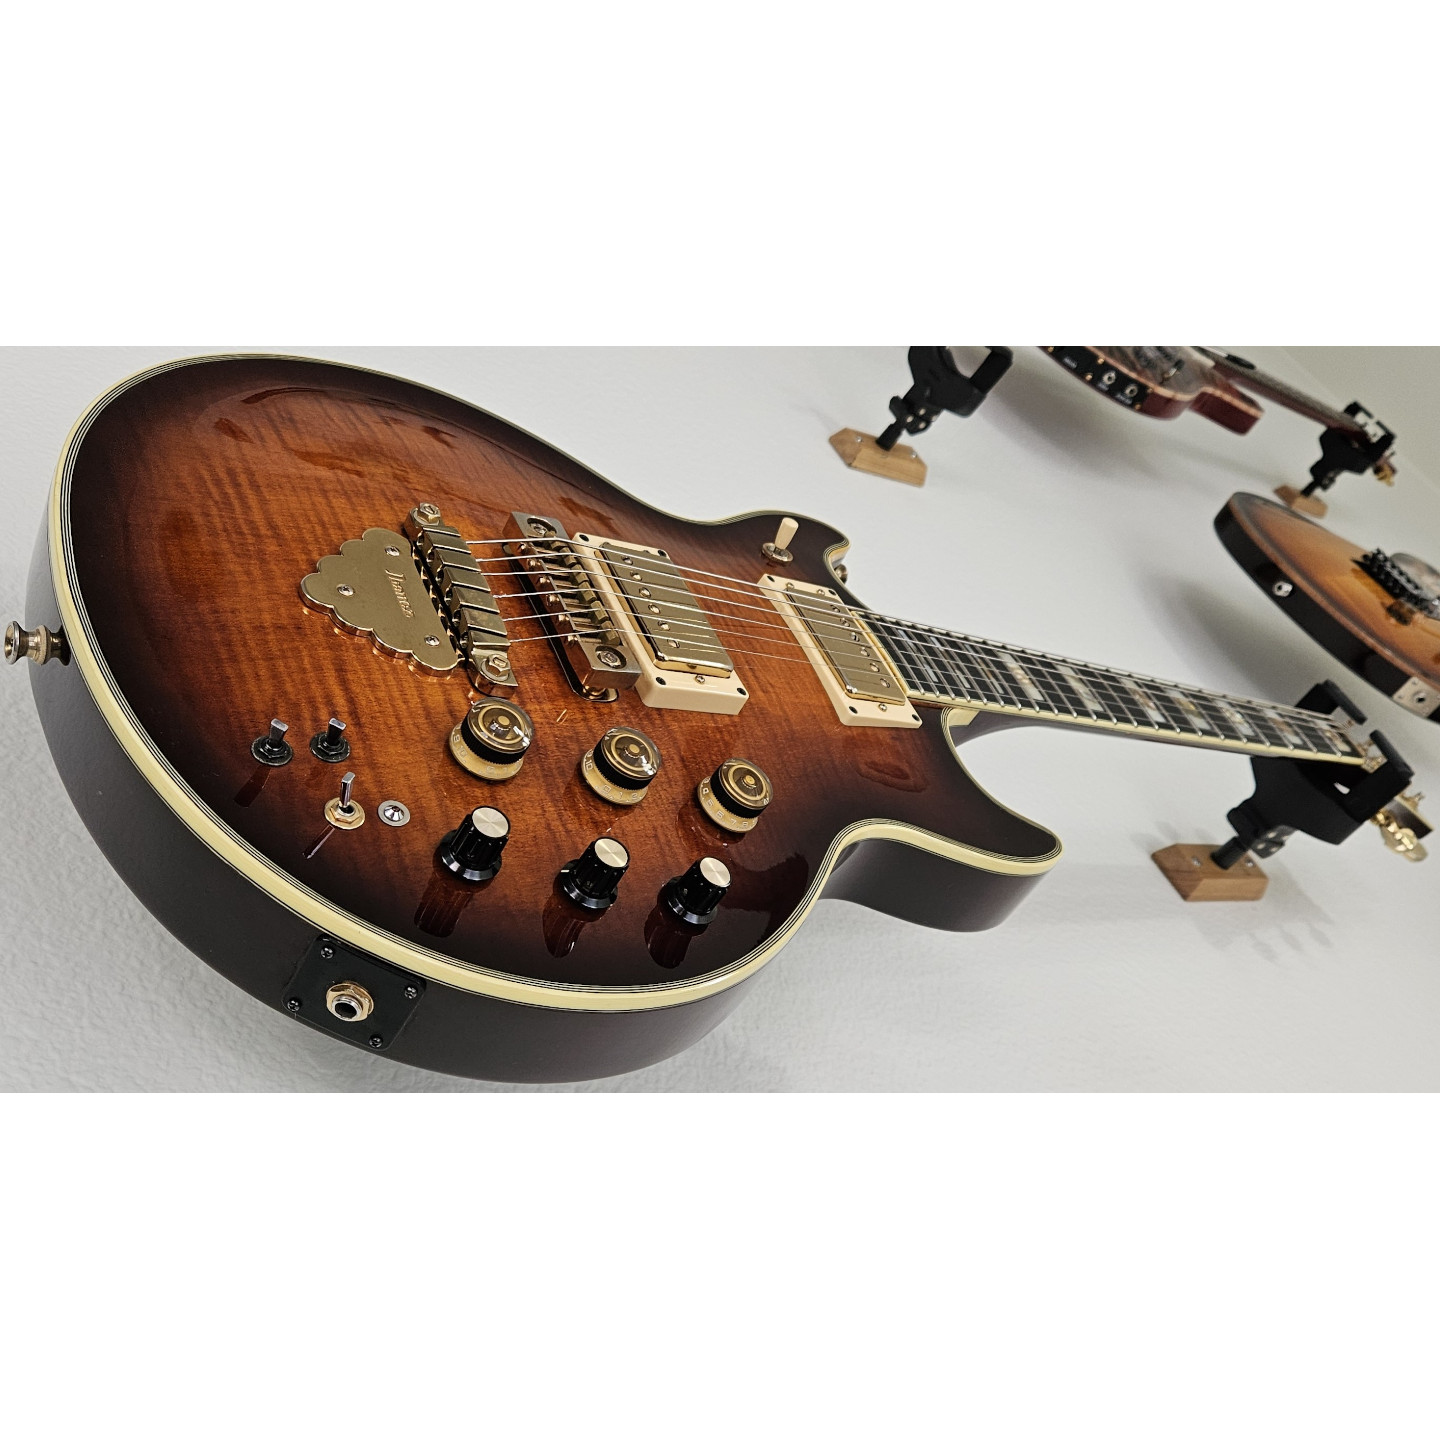 1981 Ibanez AR-500 Artist Antique Violin Vintage Electric Guitar